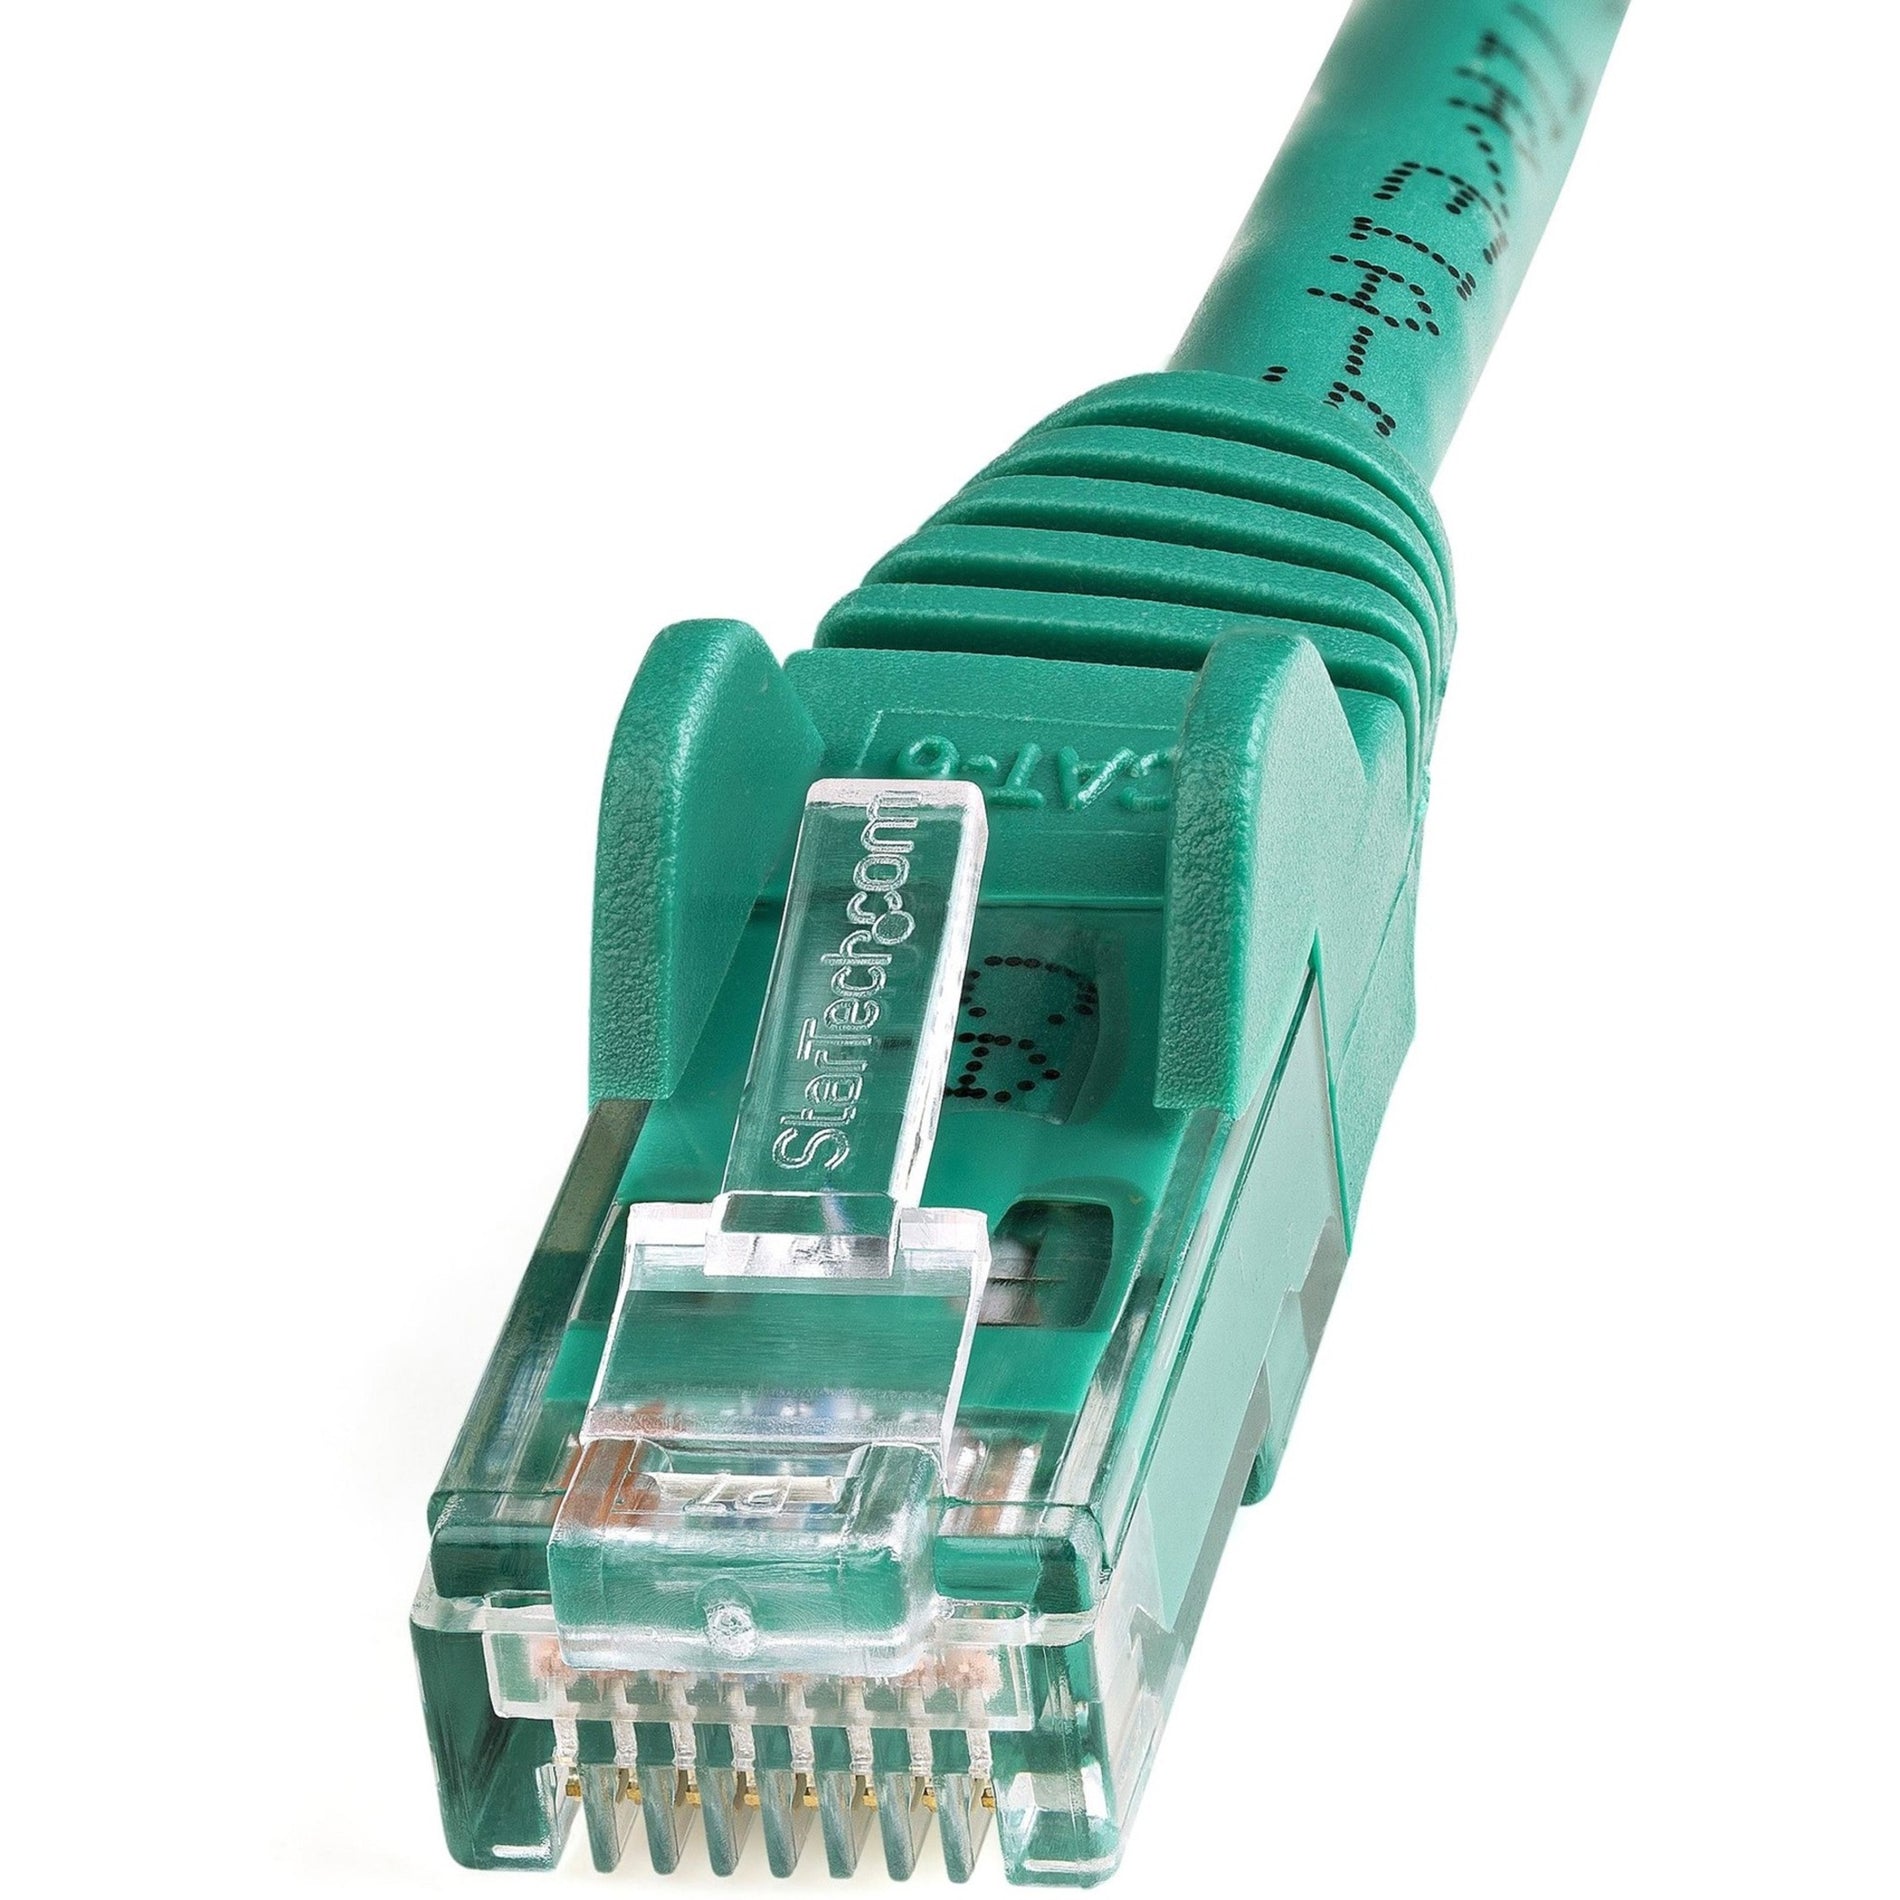 StarTech.com N6PATCH7GN 7 ft Green Snagless Cat6 UTP Patch Cable, Lifetime Warranty, ETL Verified, 10 Gbit/s Data Transfer Rate